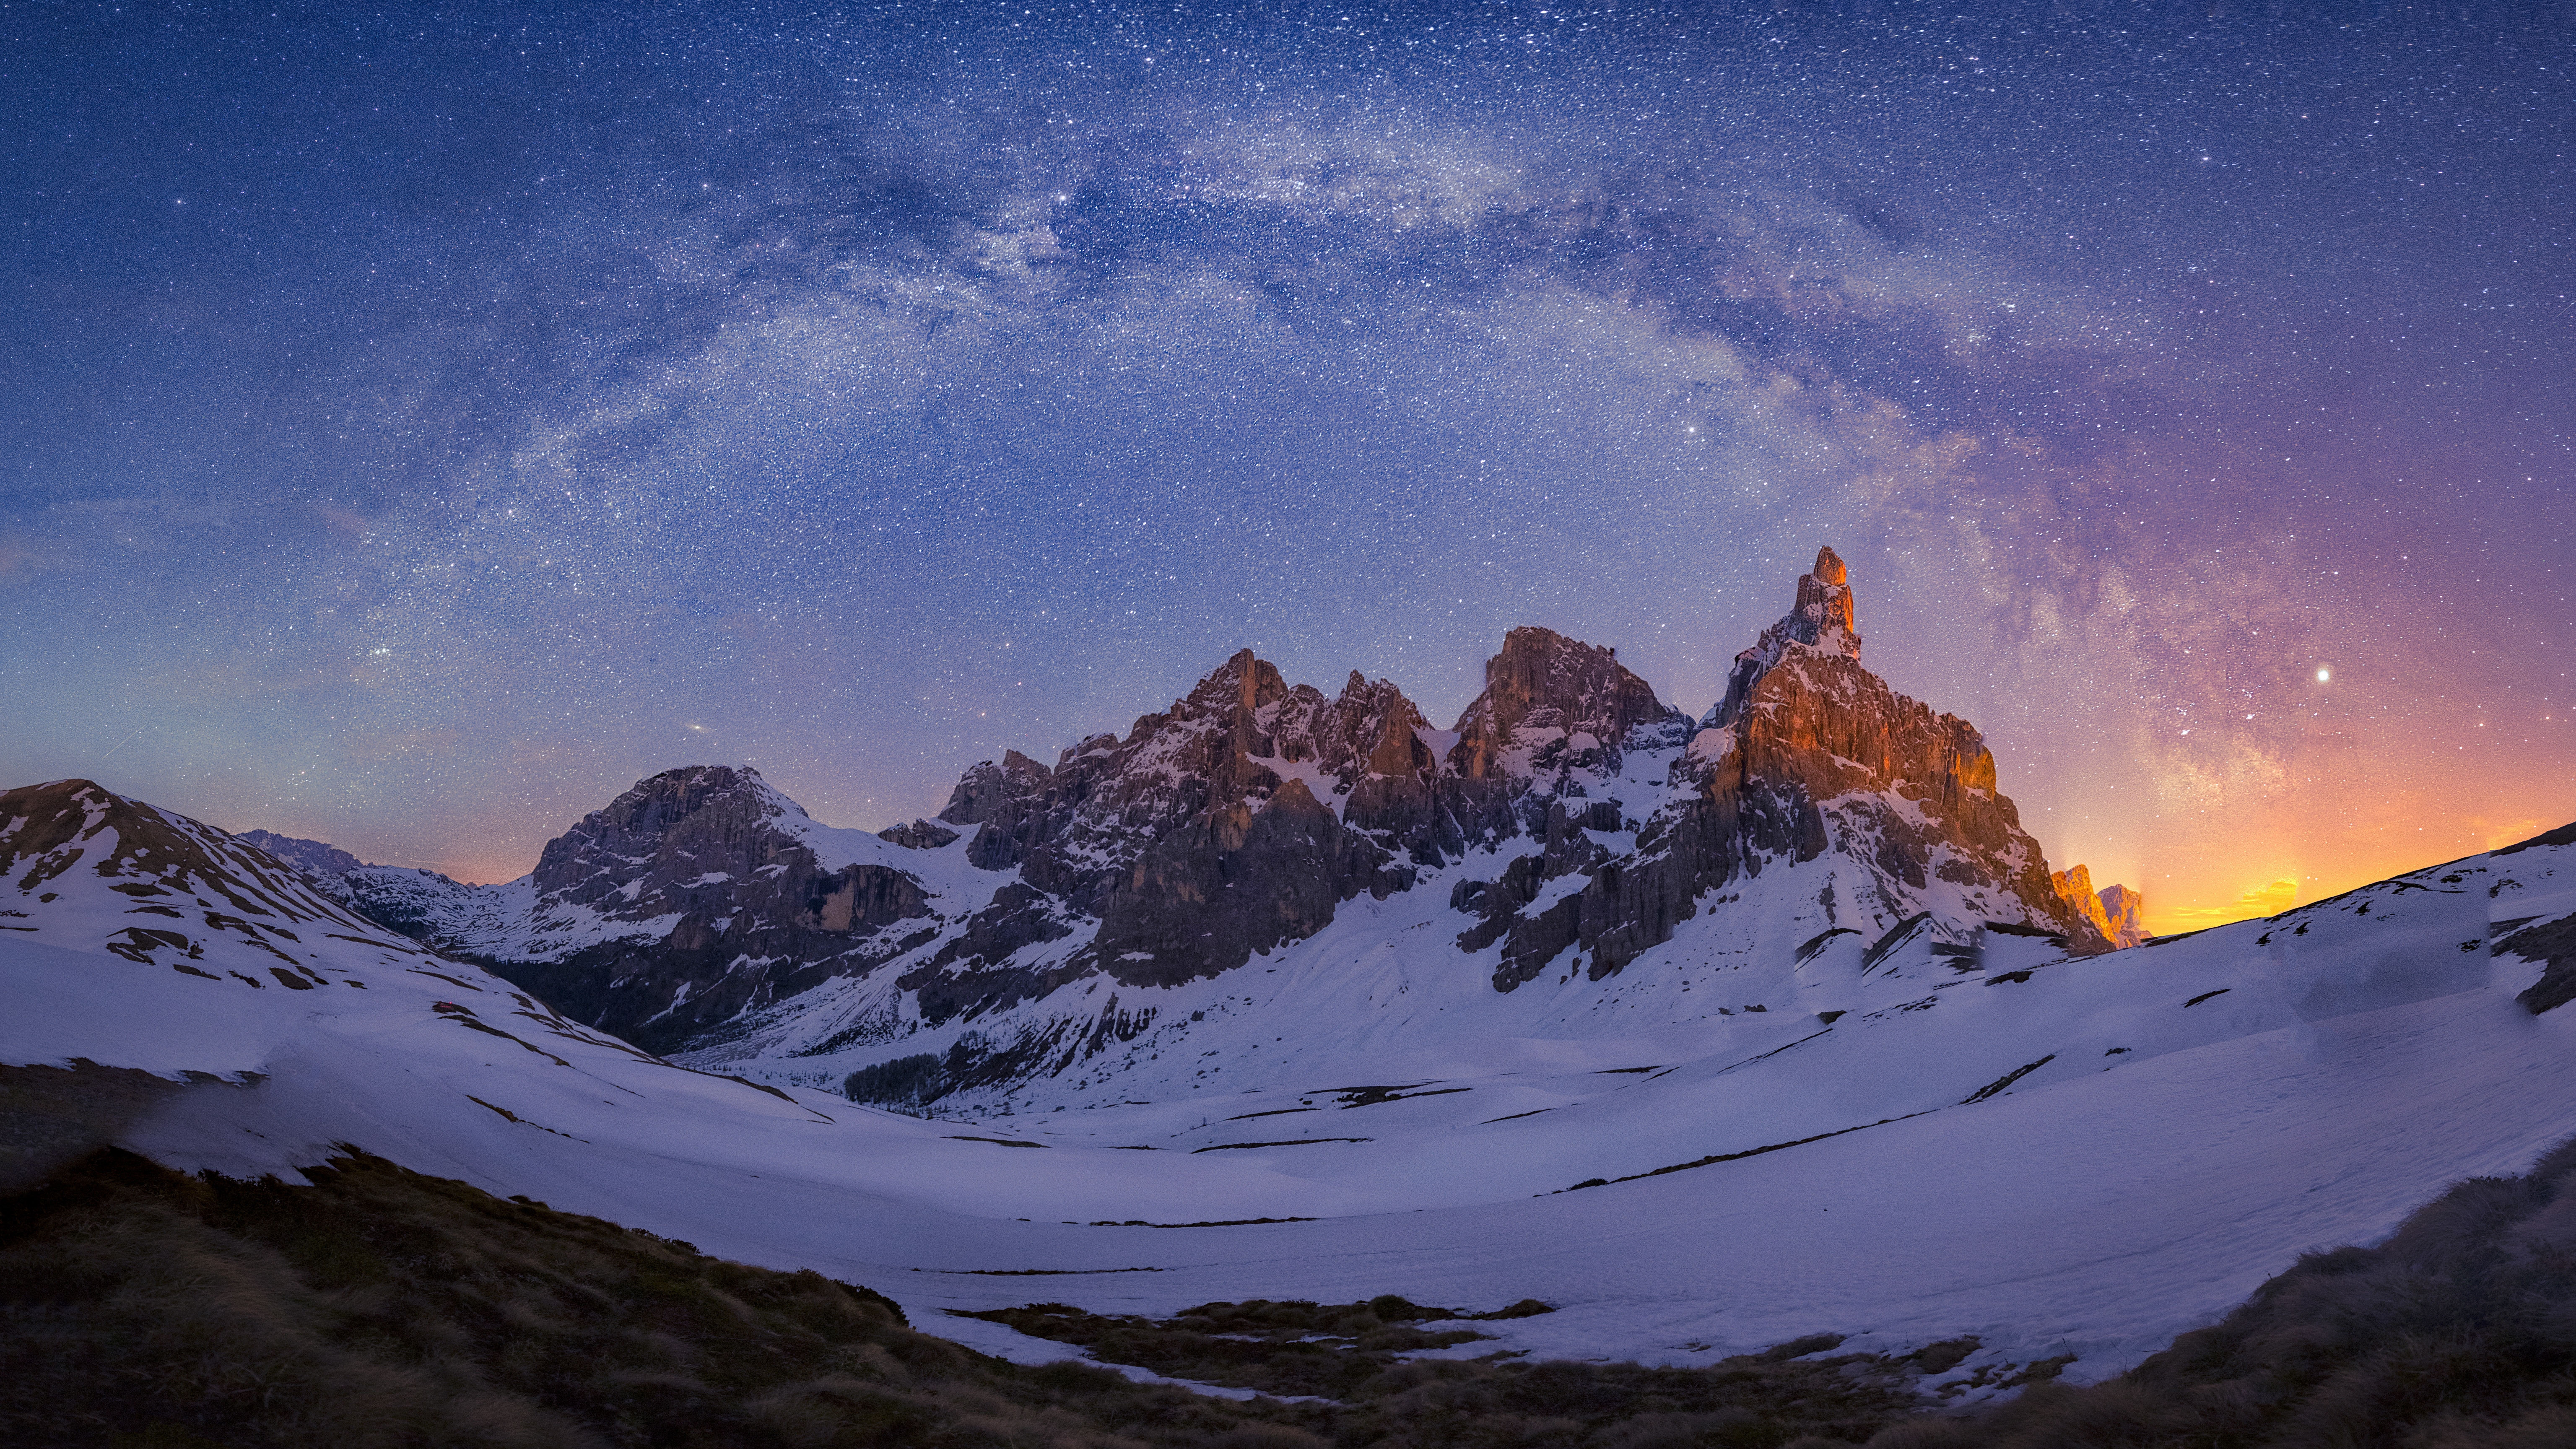 Alps under the night sky